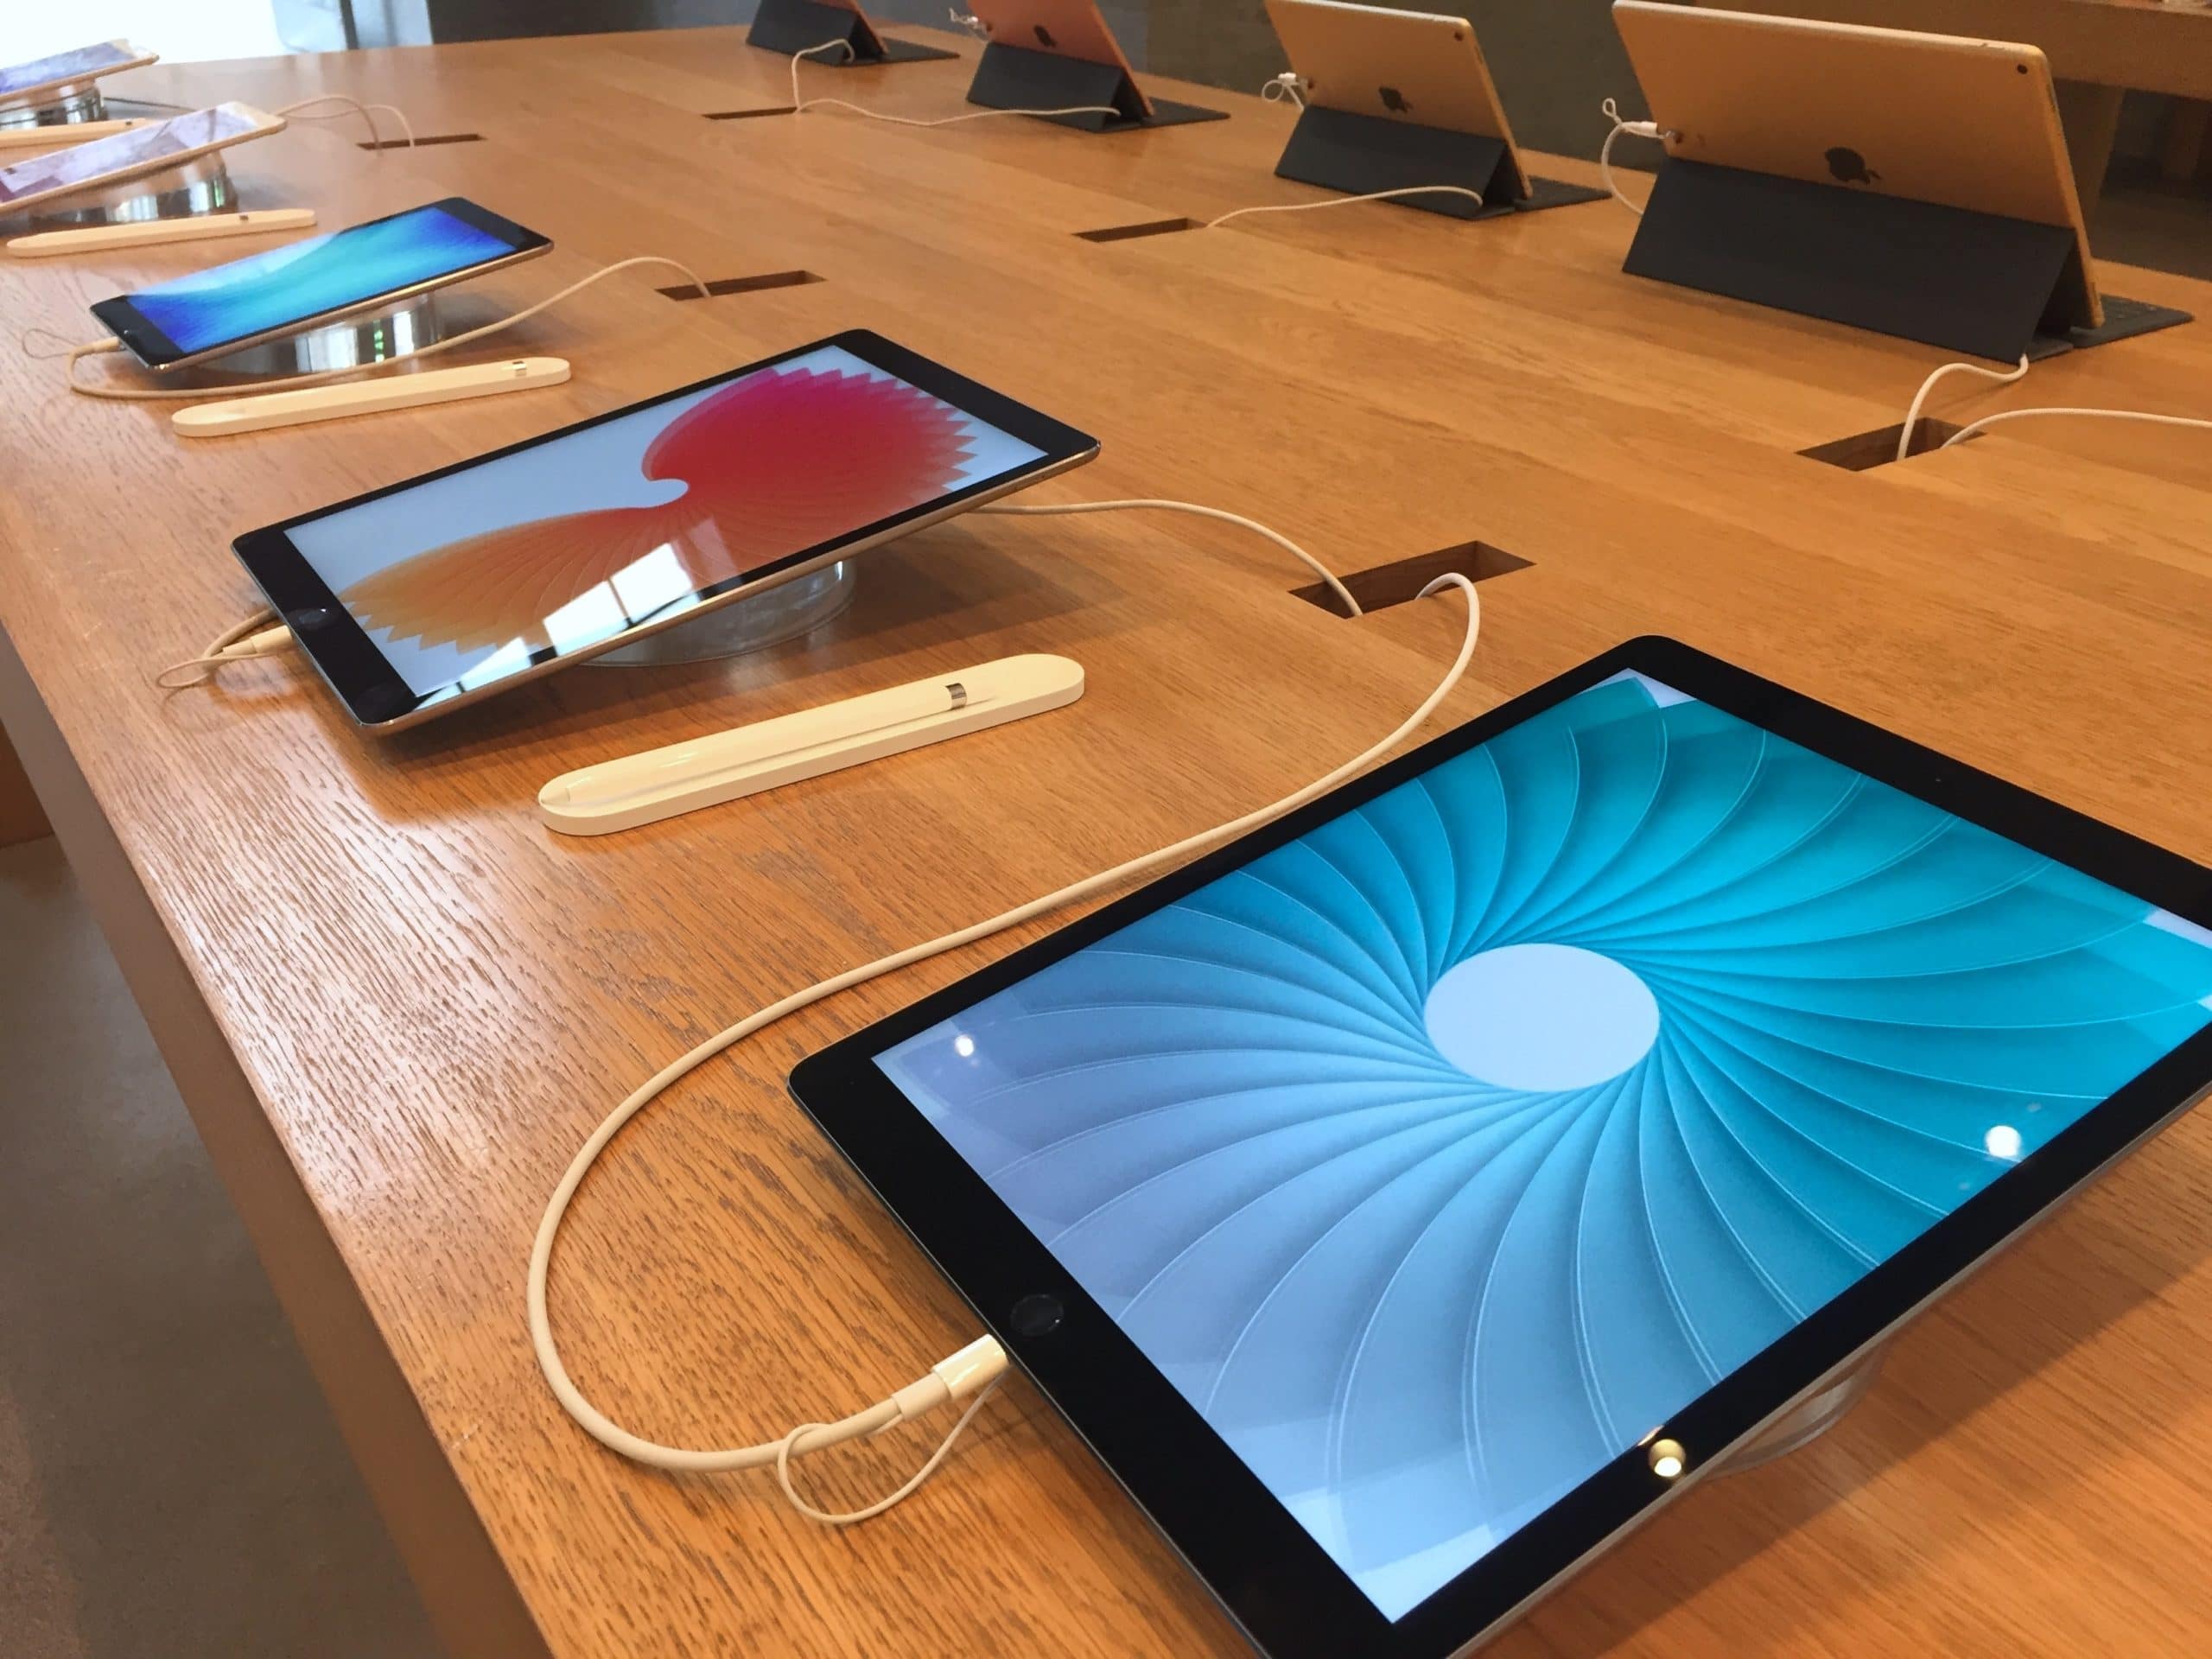 iPads expostos em loja da Apple